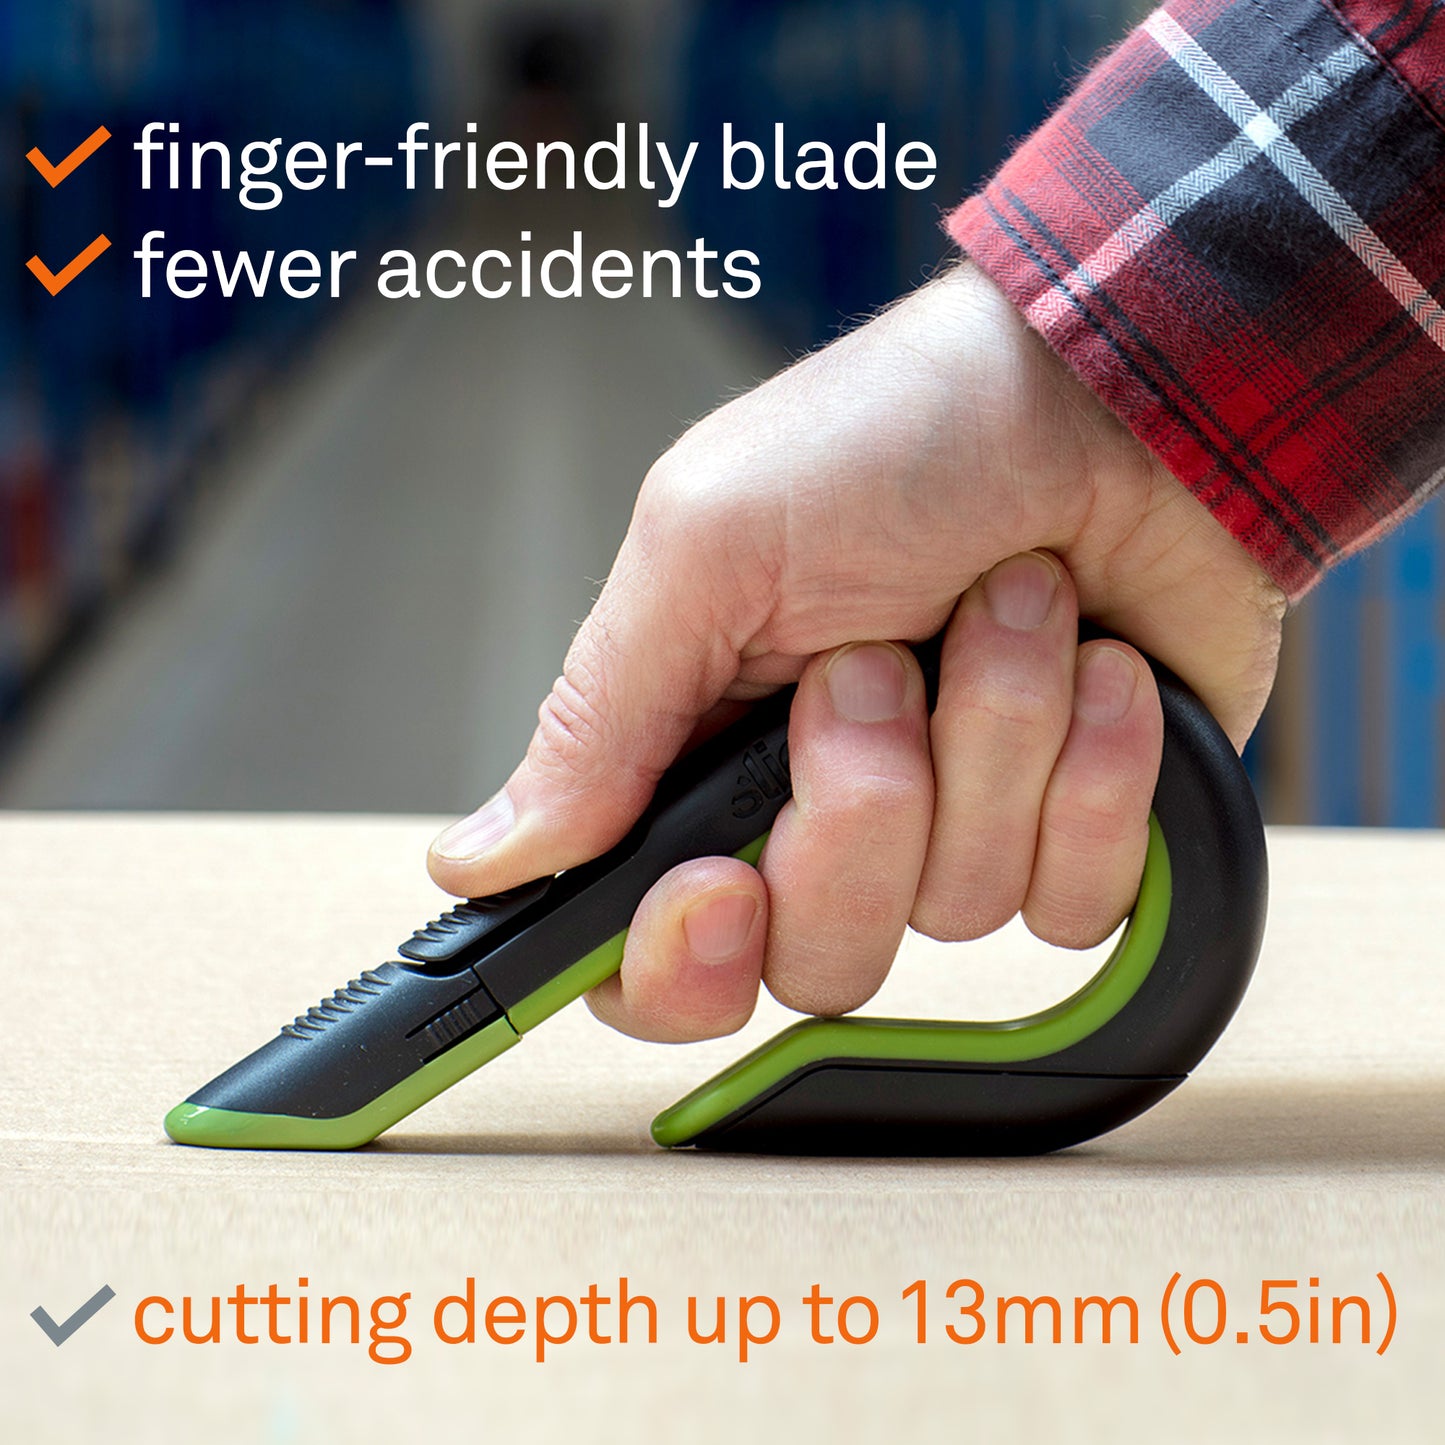 Slice Auto-Retractable Box Cutter has a finger friendly blade